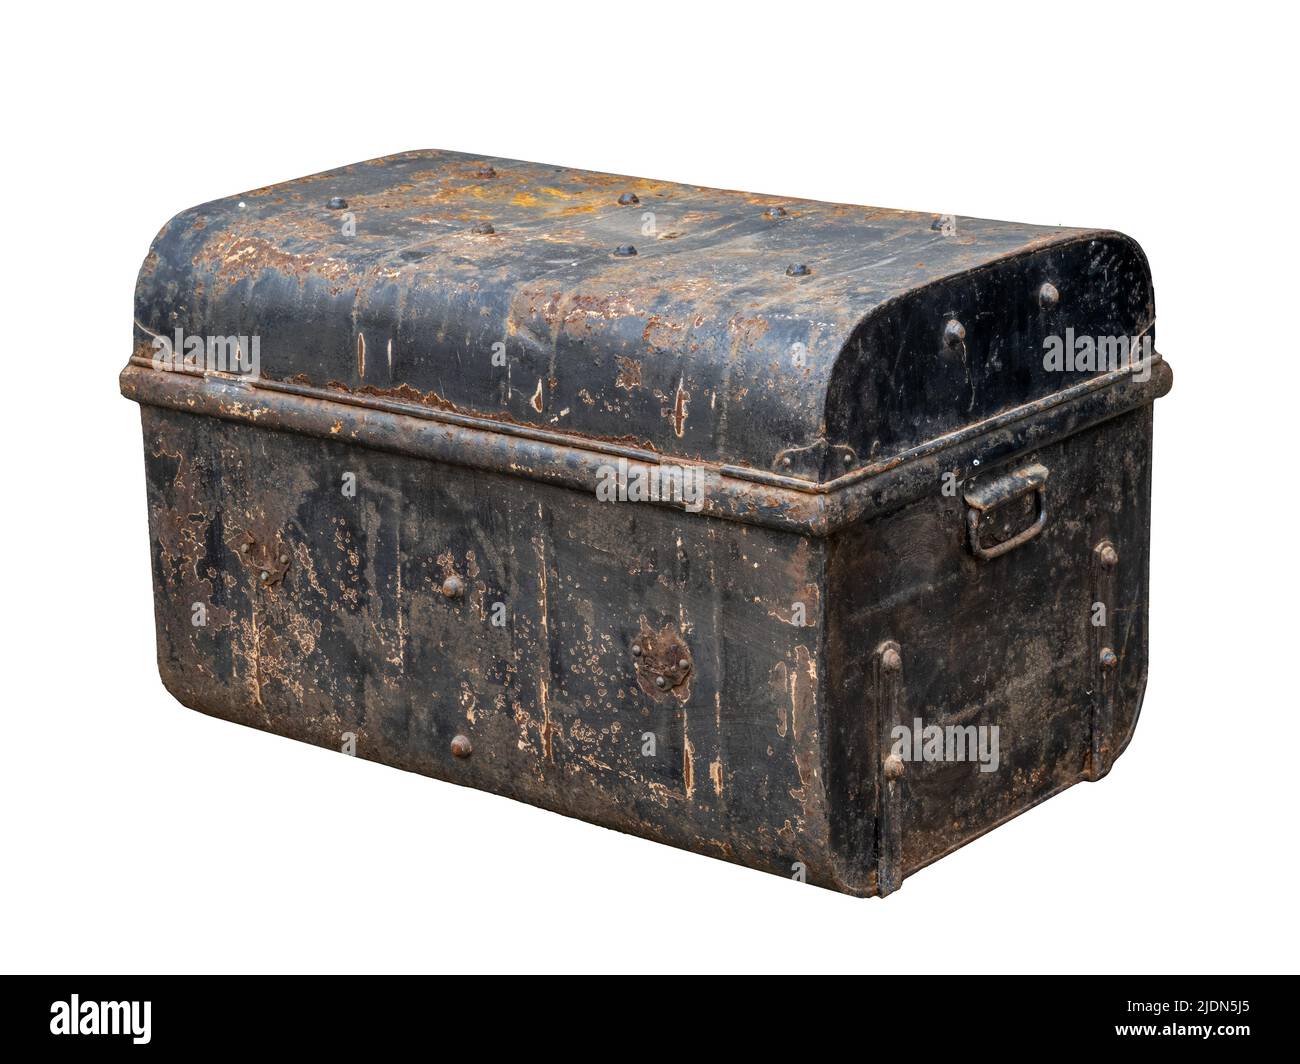 Old rusty metal box isolated Banque d'images détourées - Alamy